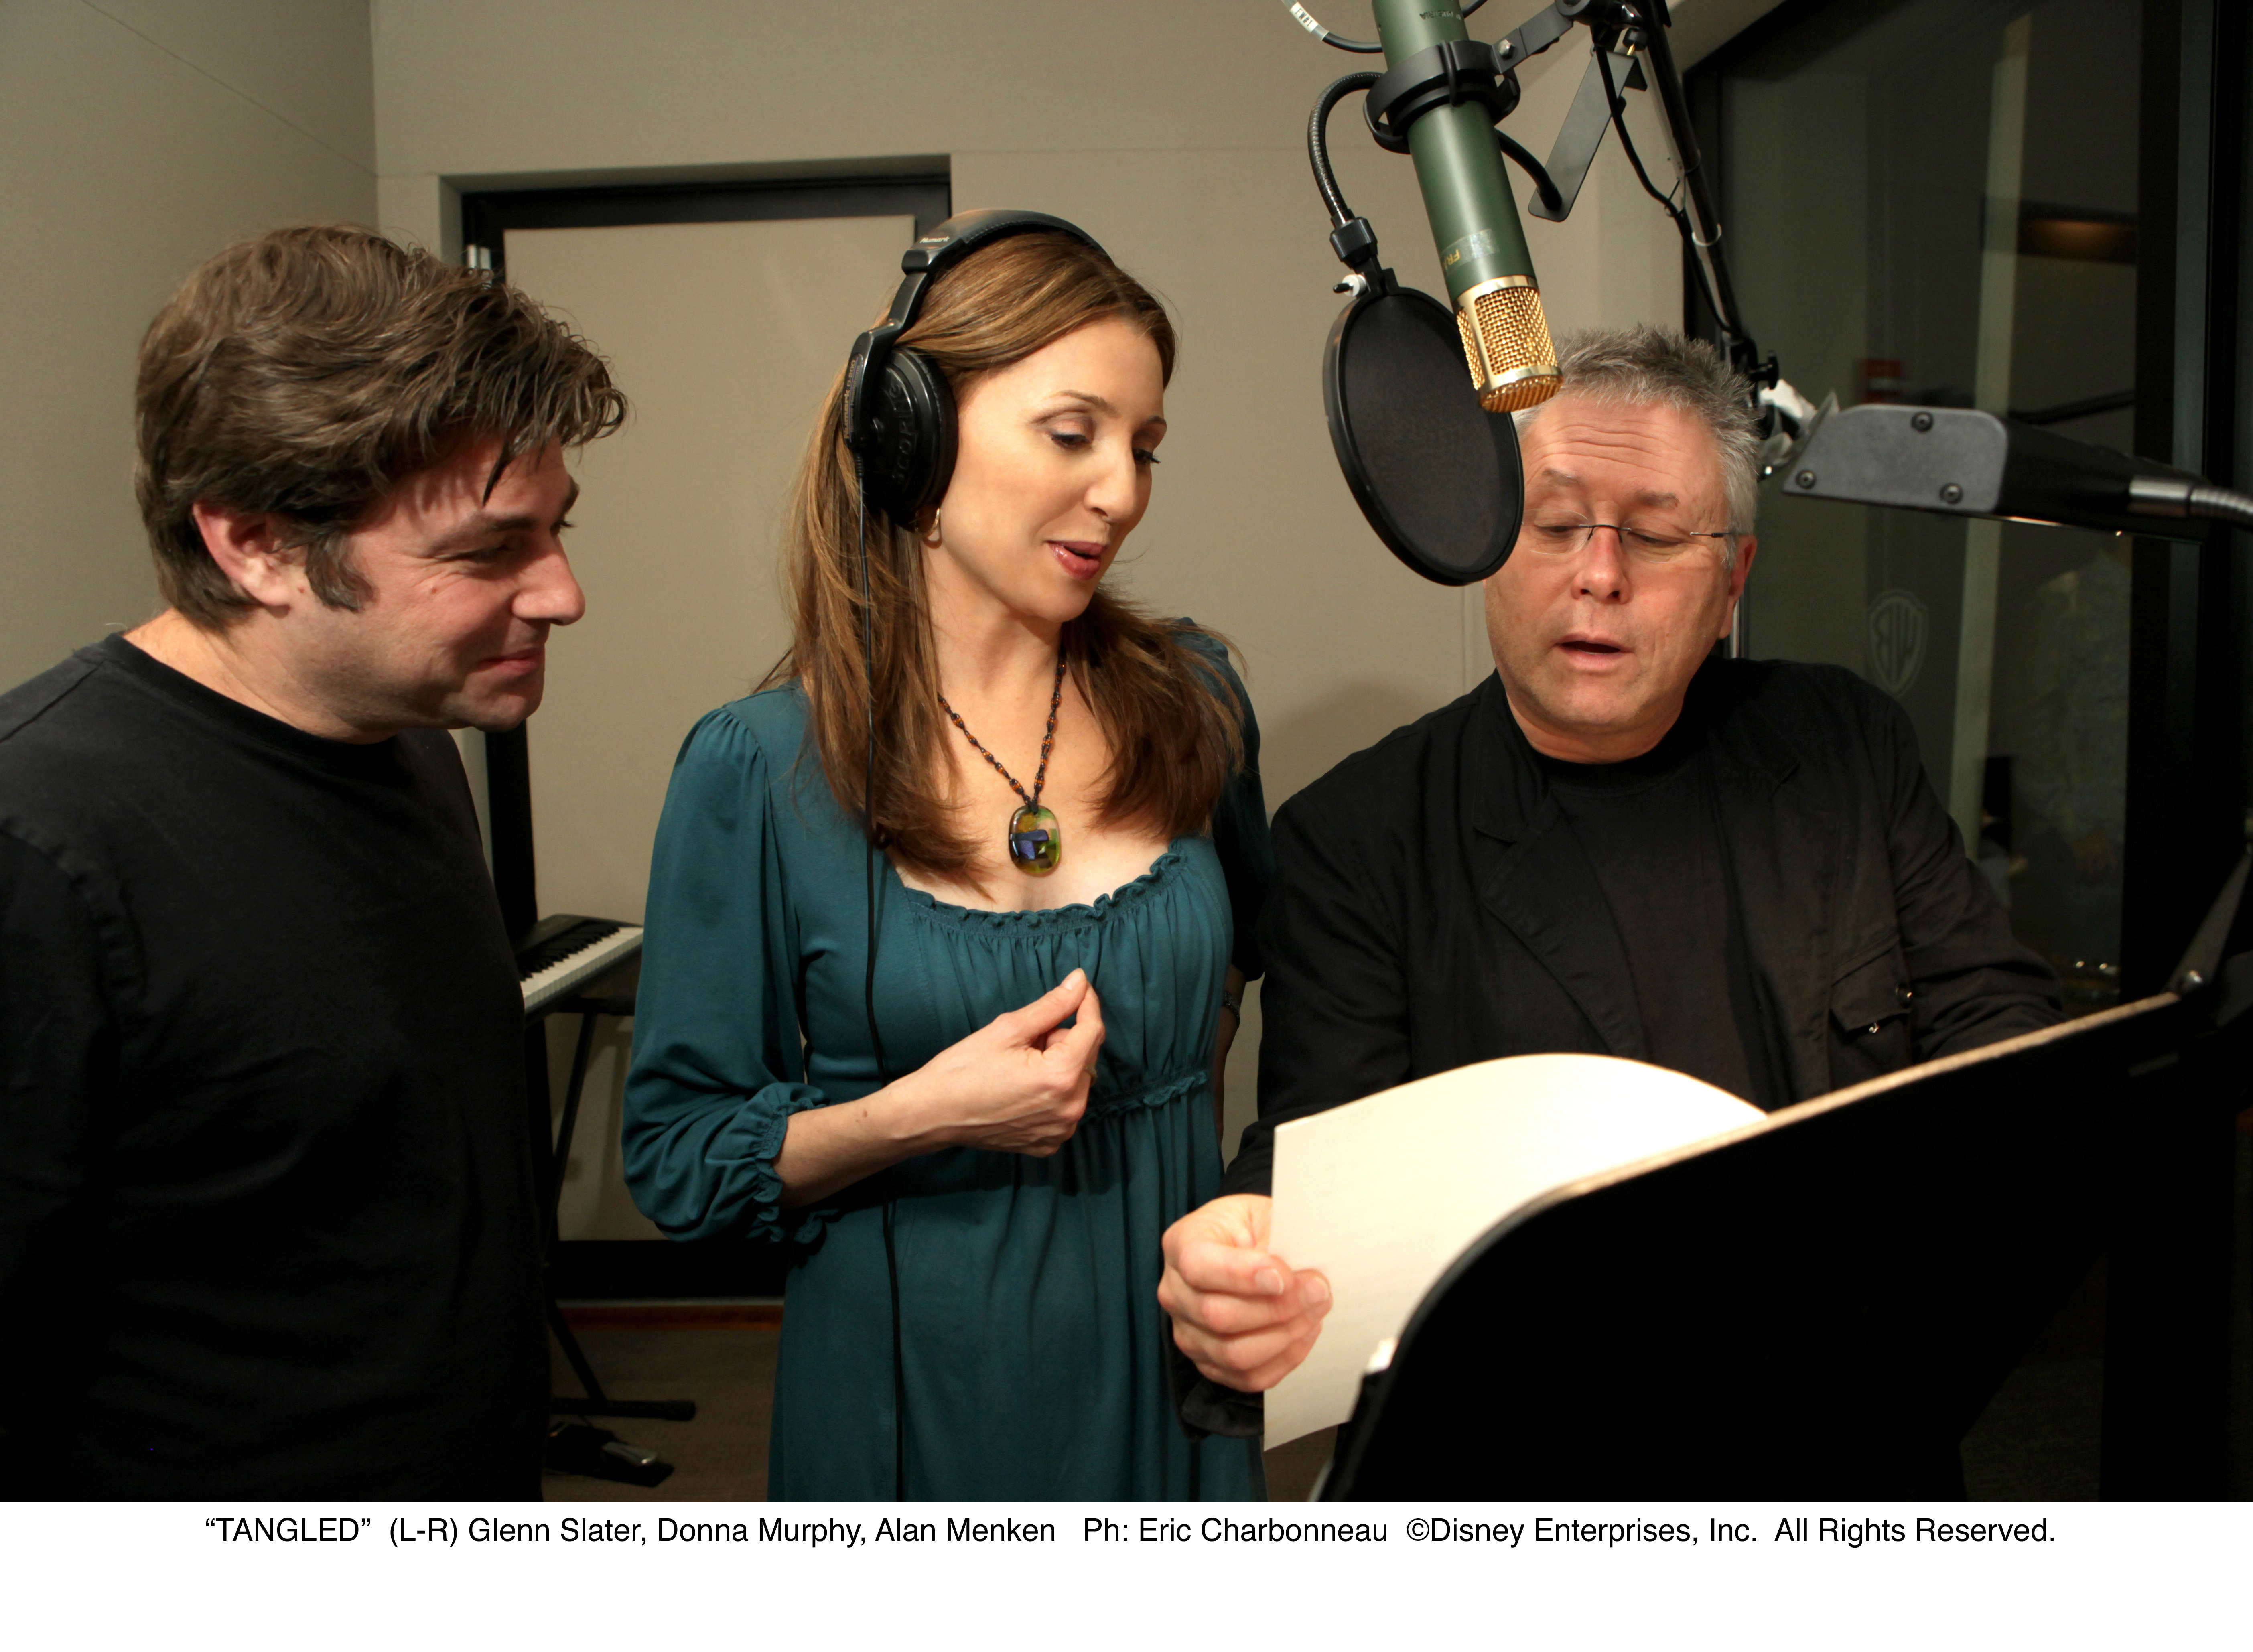 Donna Murphy in the recording studio with Glenn Slater and Alan Menken.